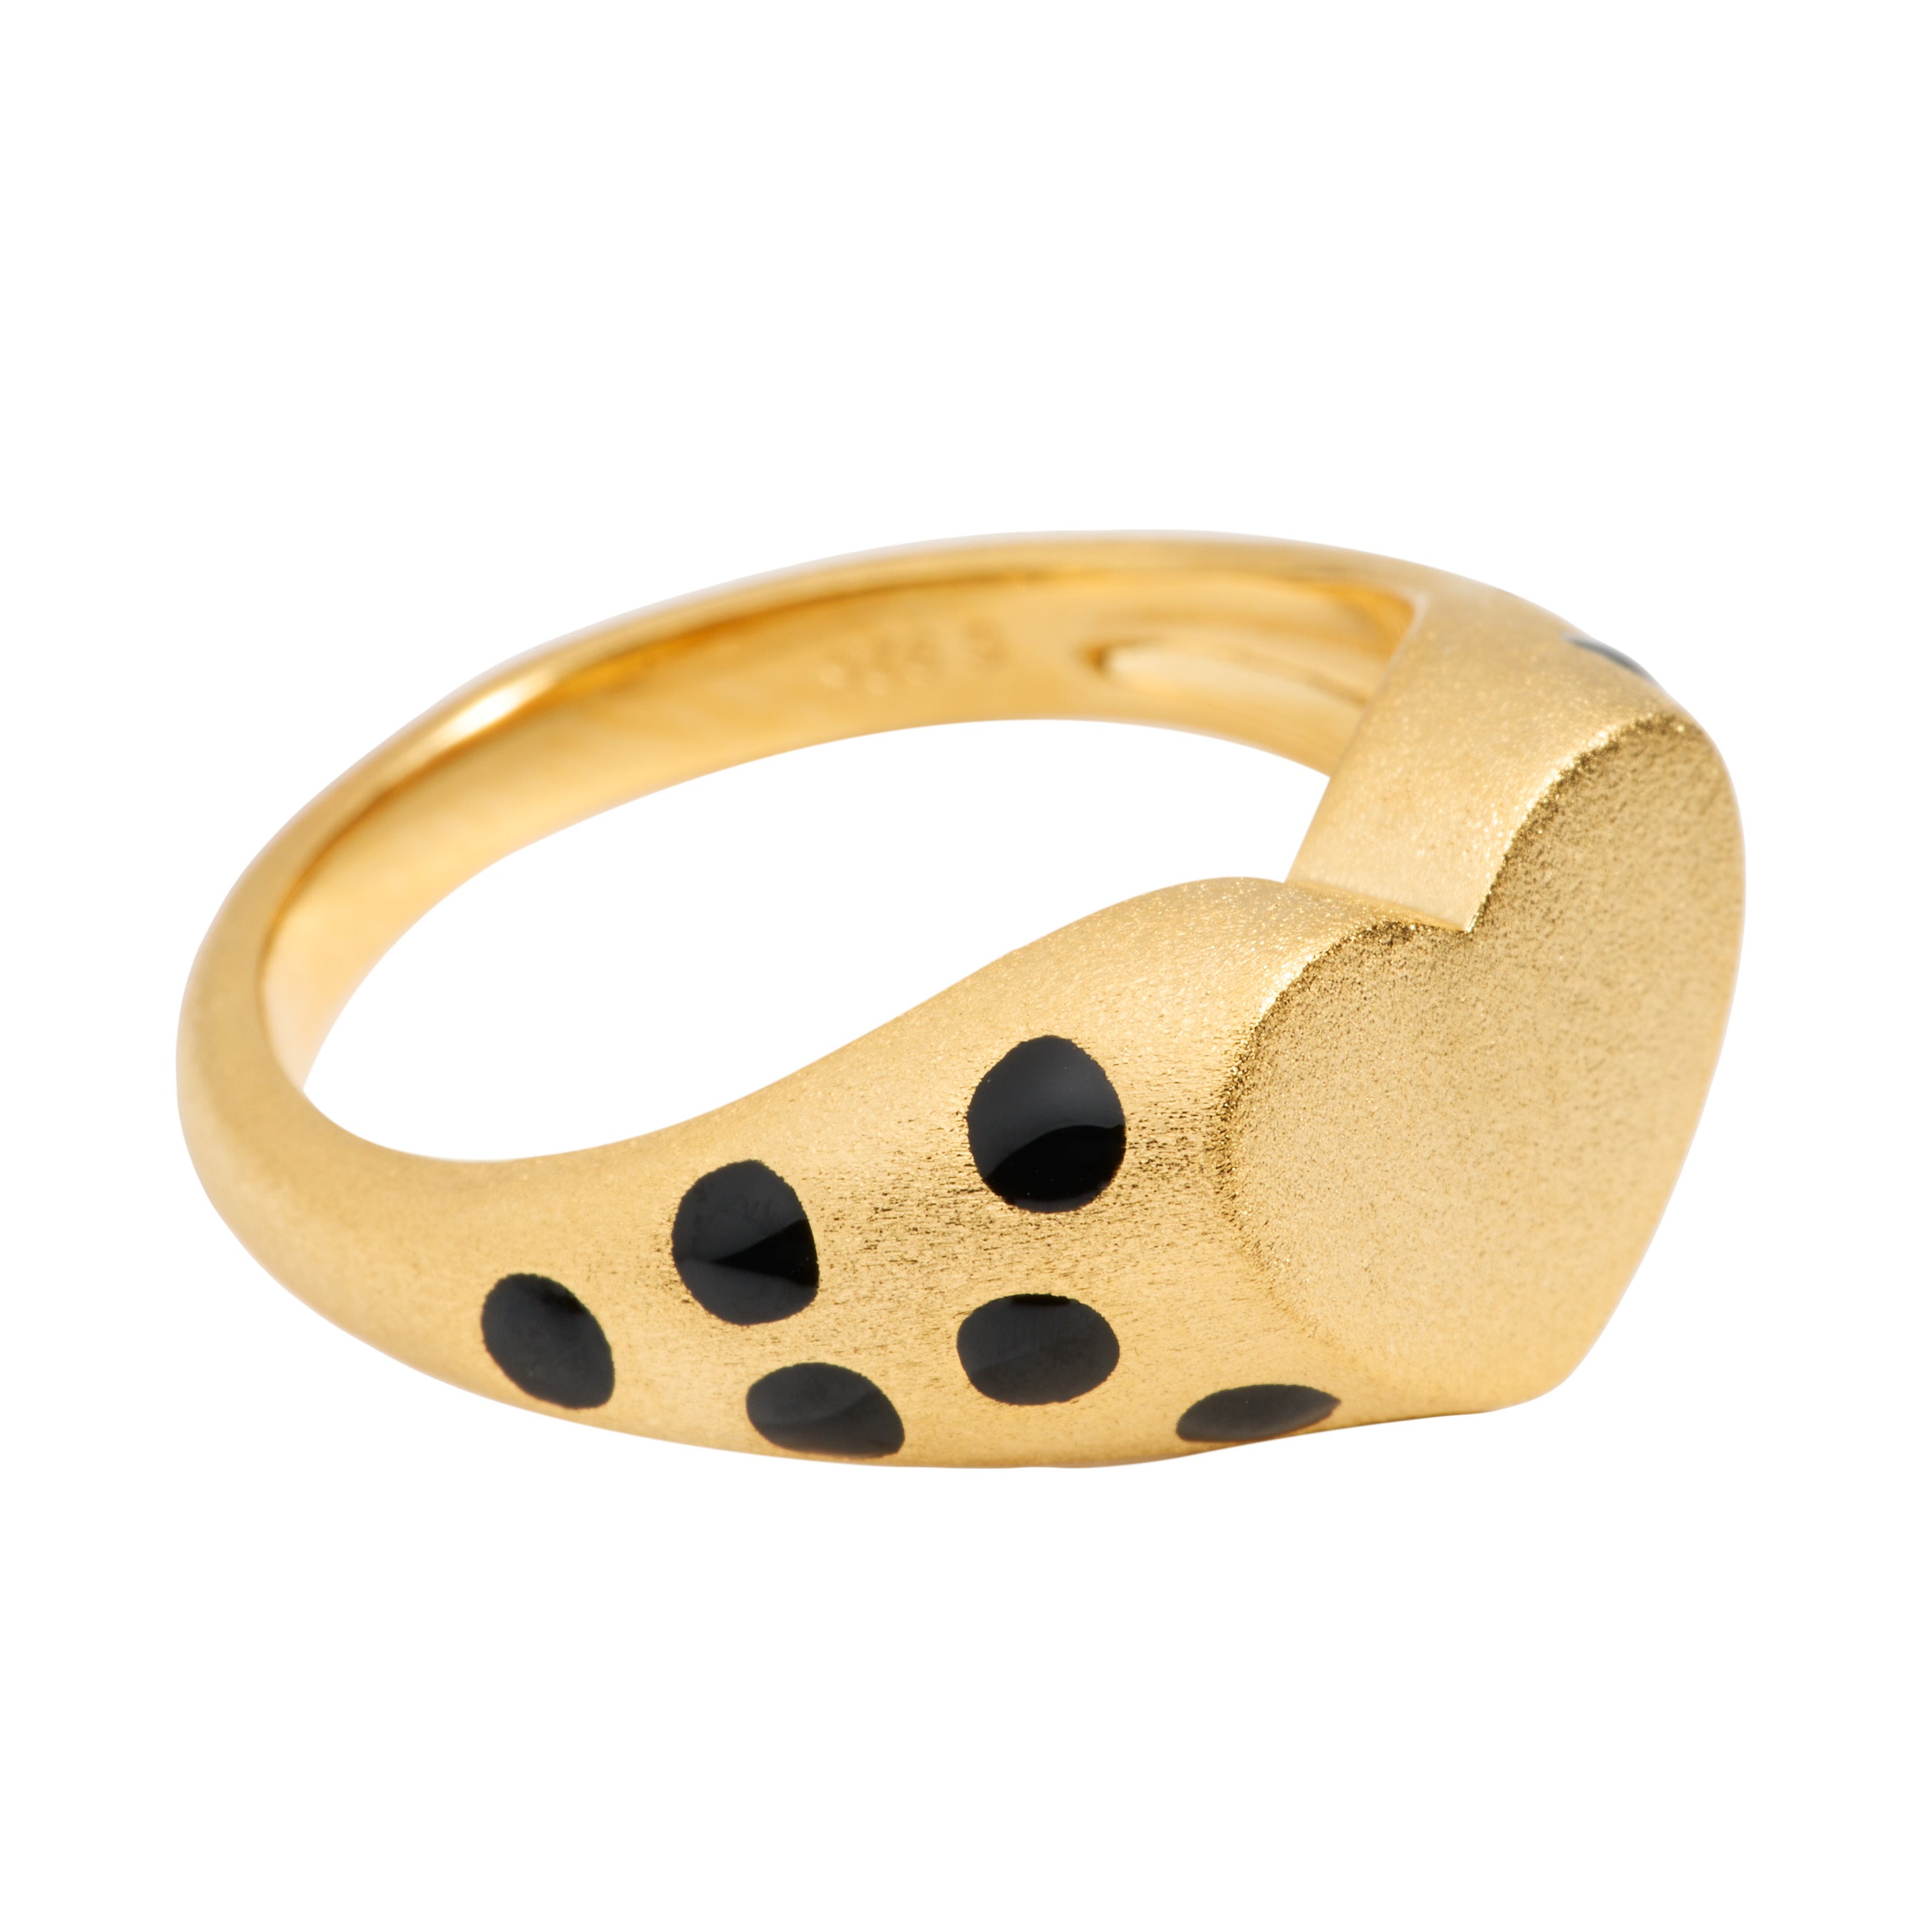 AMMANII Heart-Shaped Signet Ring with Polkadot Enamel in Vermeil Gold